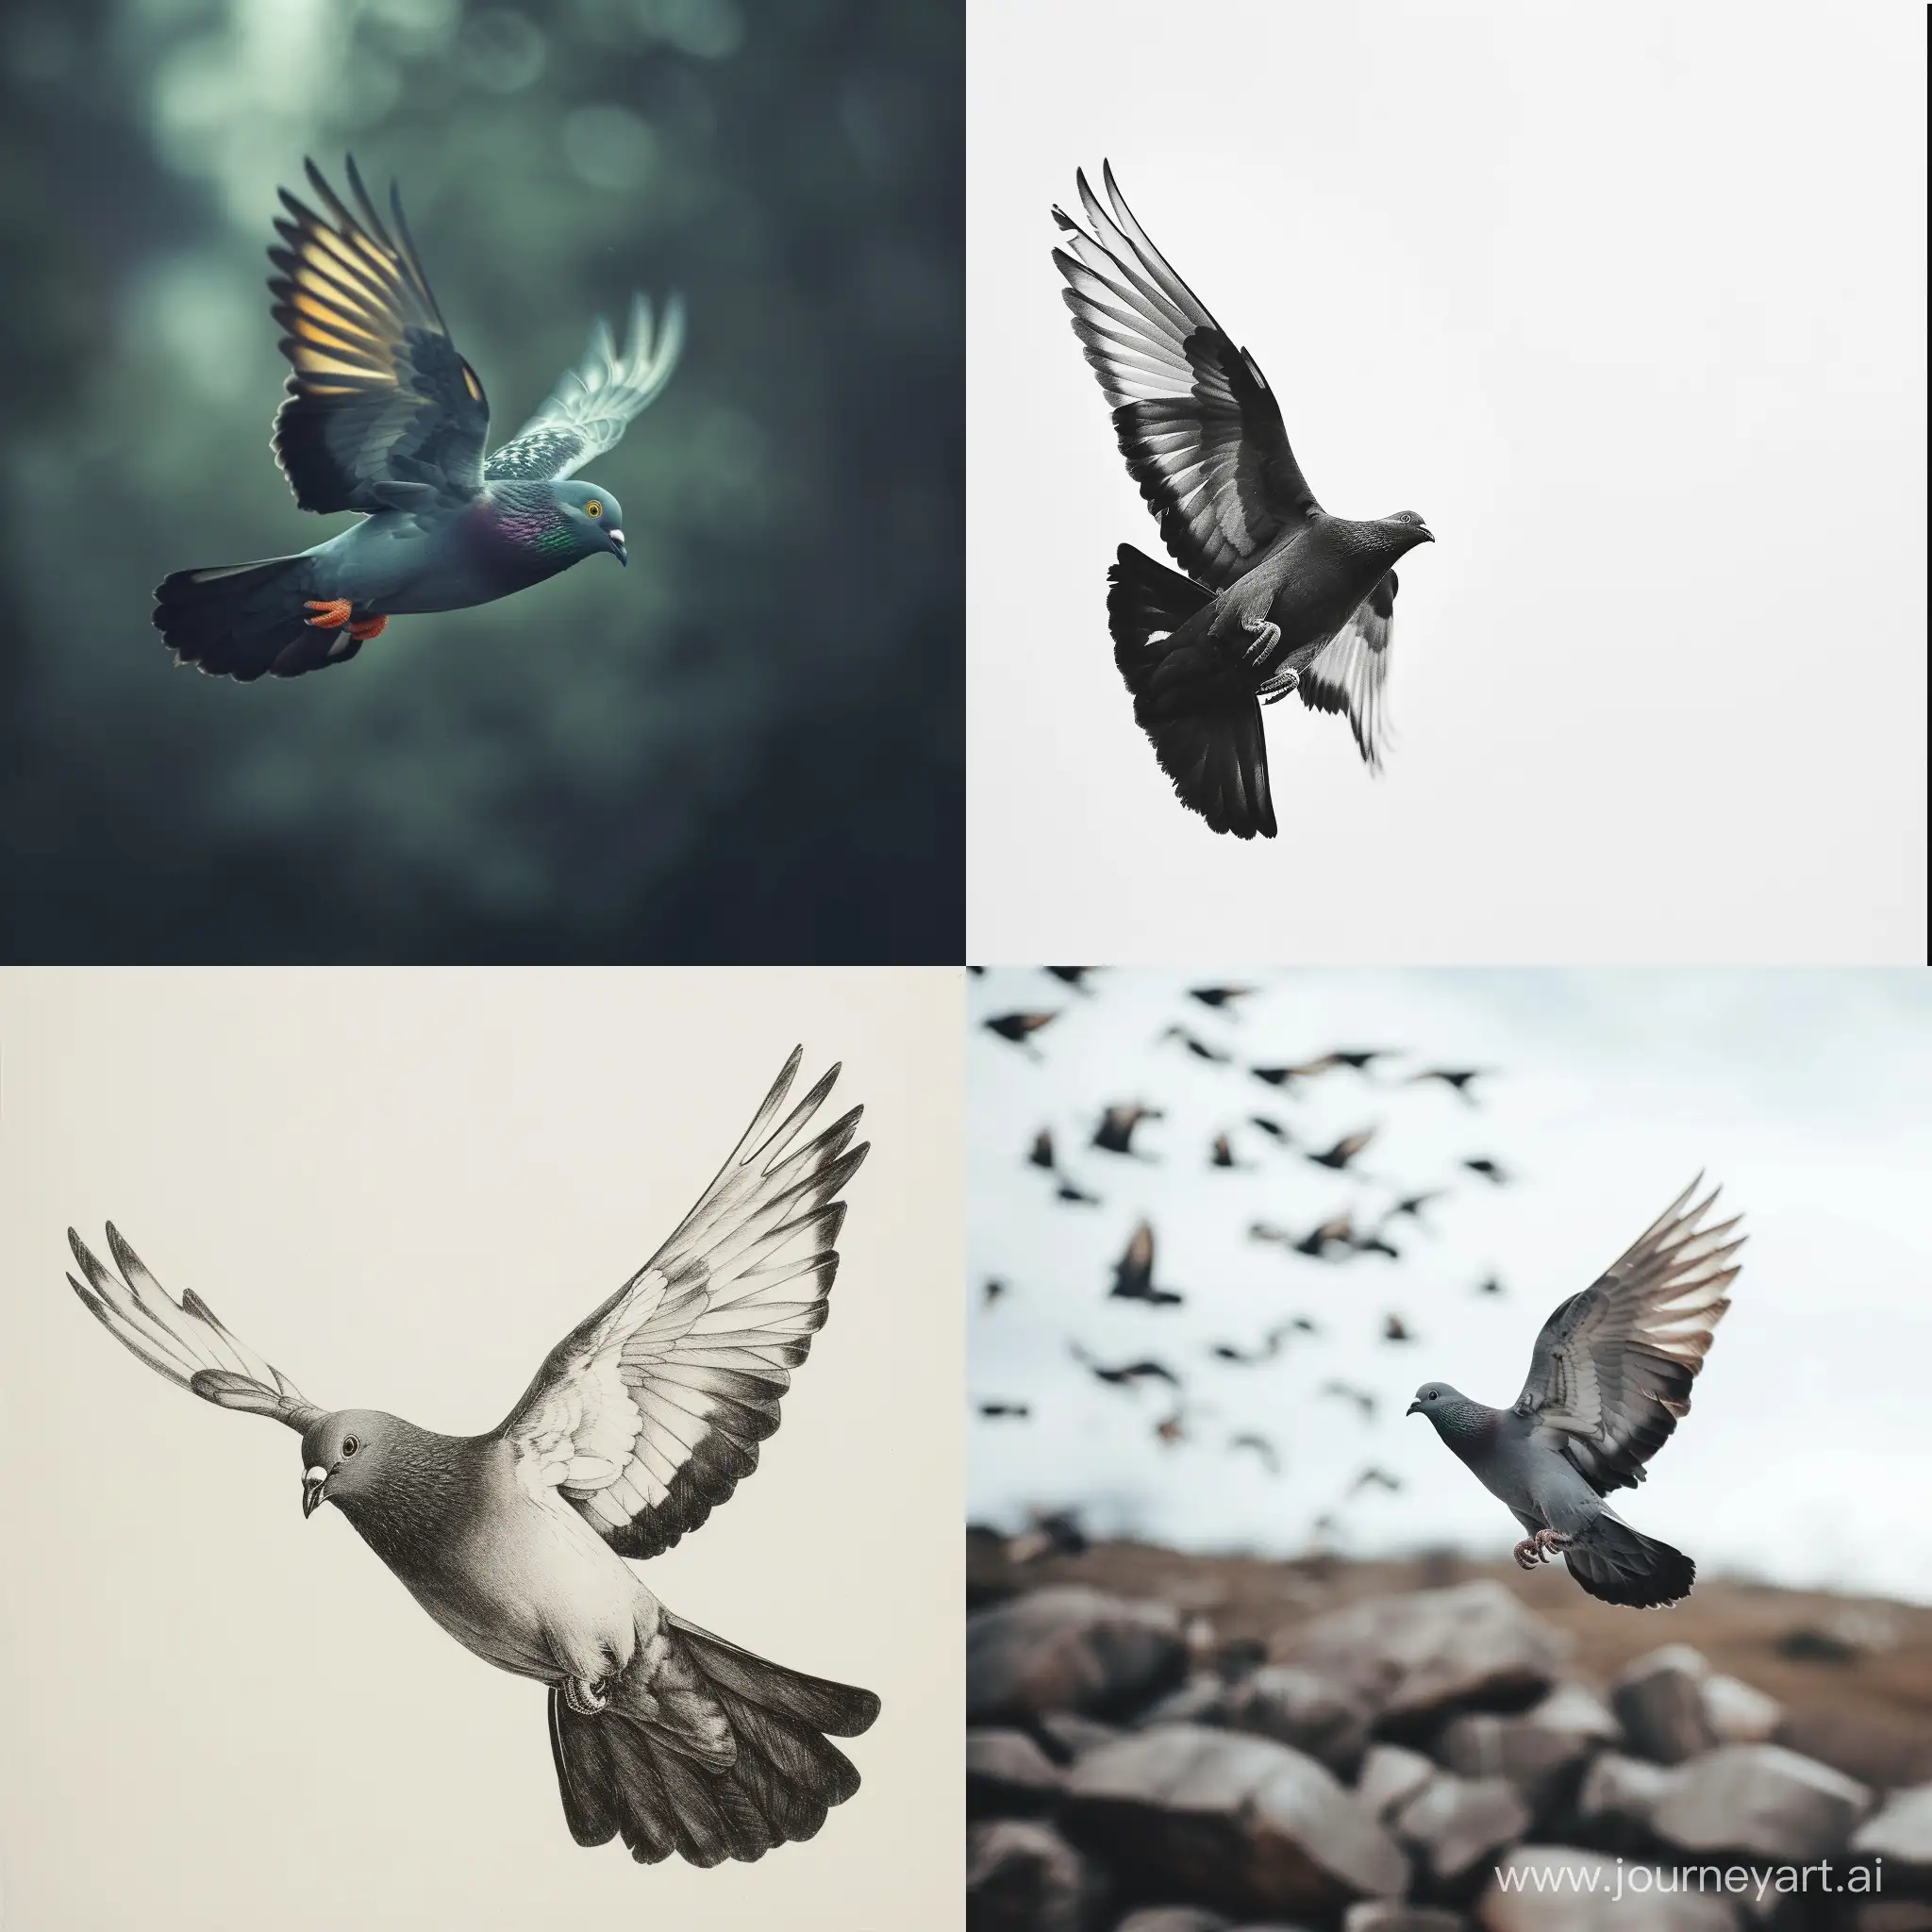 Graceful-Pigeon-in-Flight-Majestic-Bird-Soaring-with-Elegance